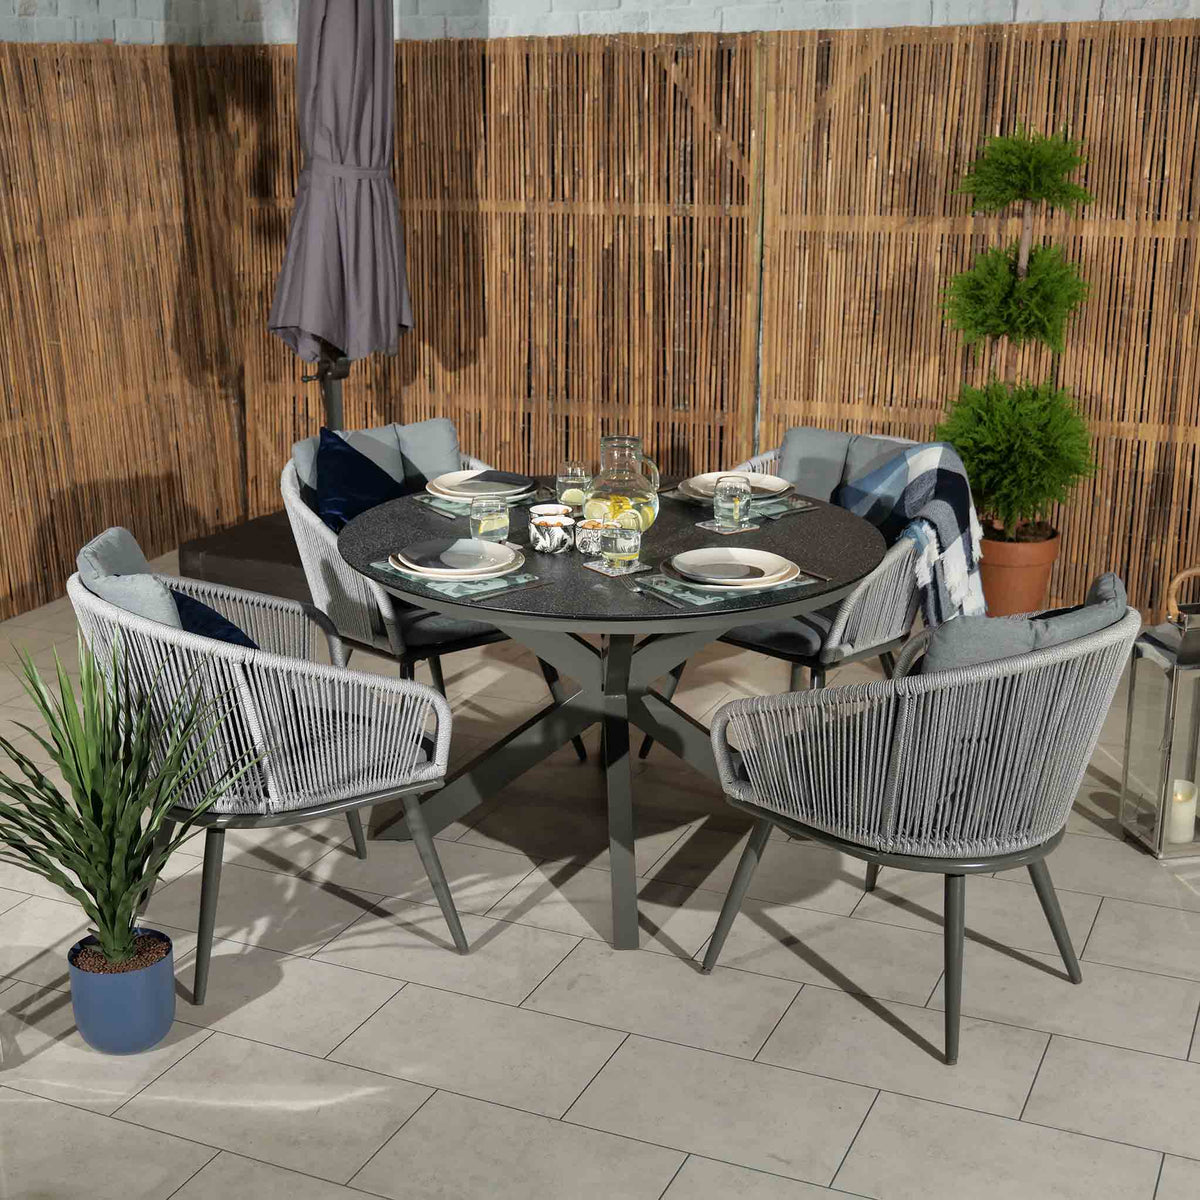 Aspen 4 Seat Stone Look Garden Dining Set from Roseland Furniture